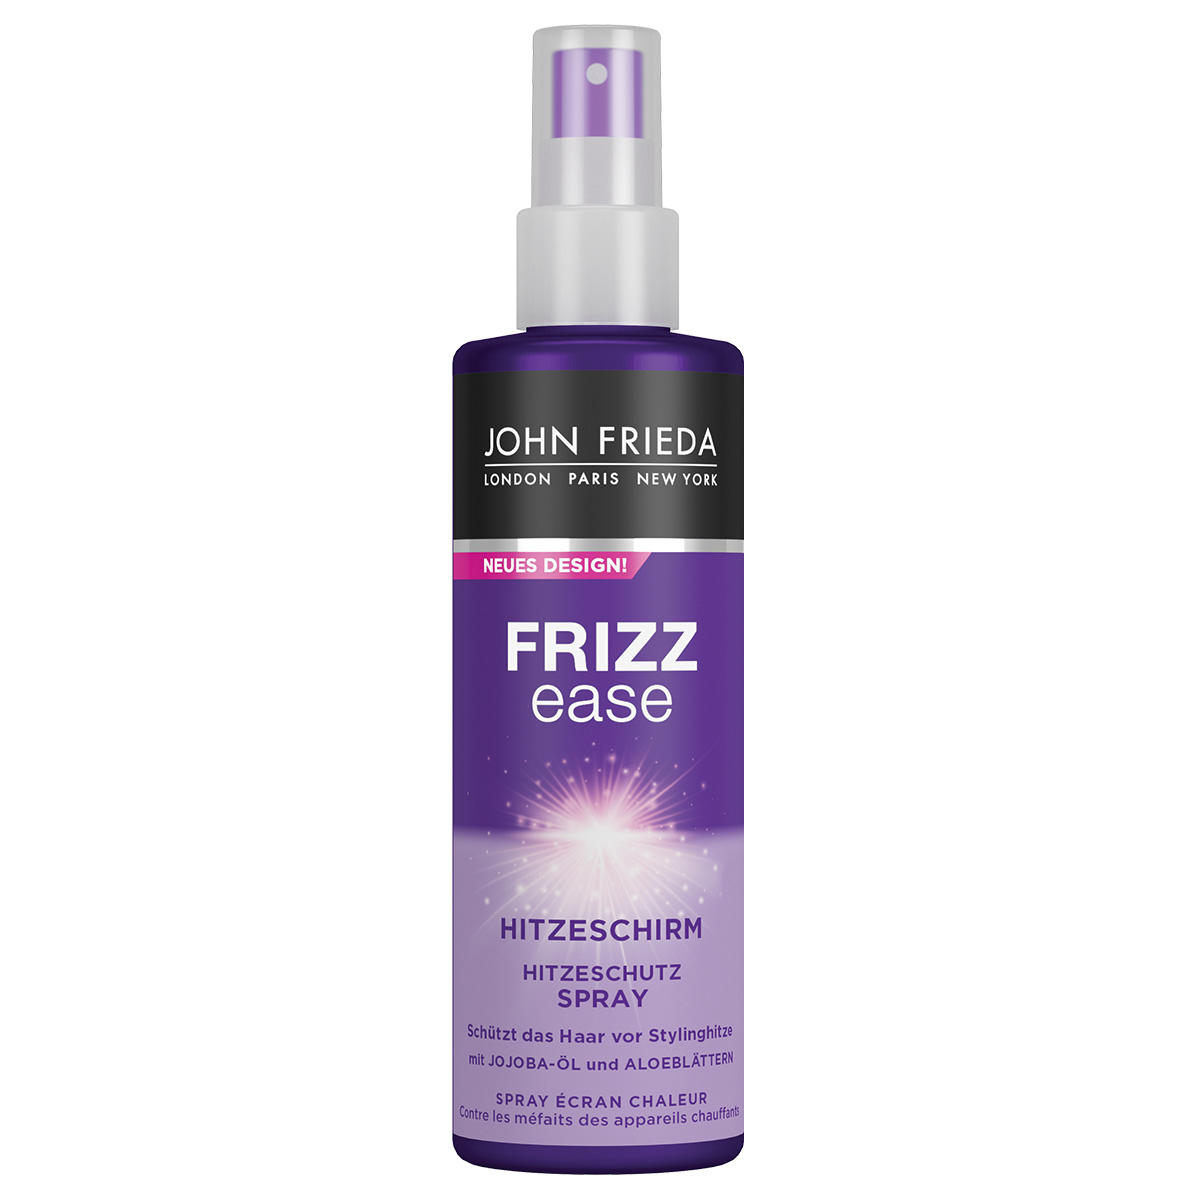 JOHN FRIEDA Frizz Ease Hitzeschutz Spray 200 ml - 1